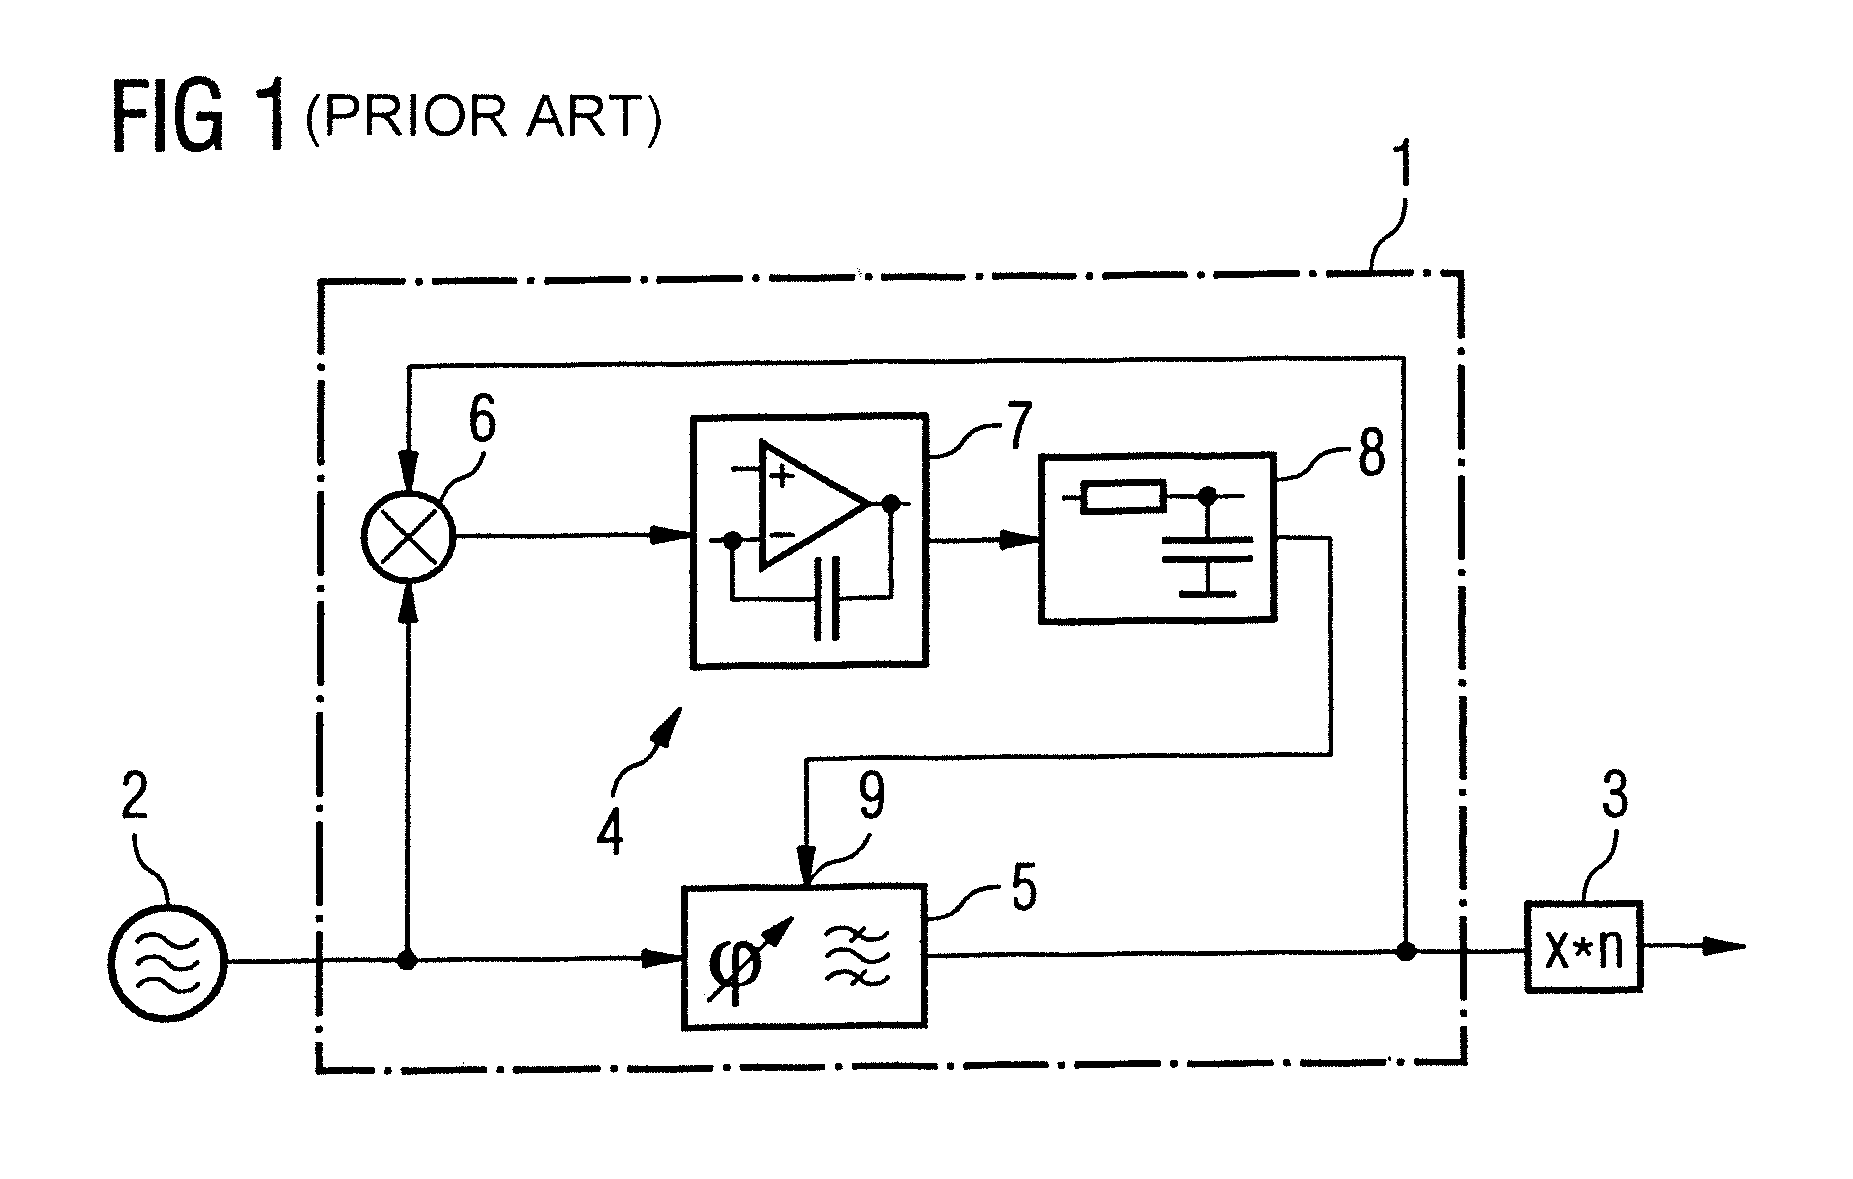 Filter circuit arrangement